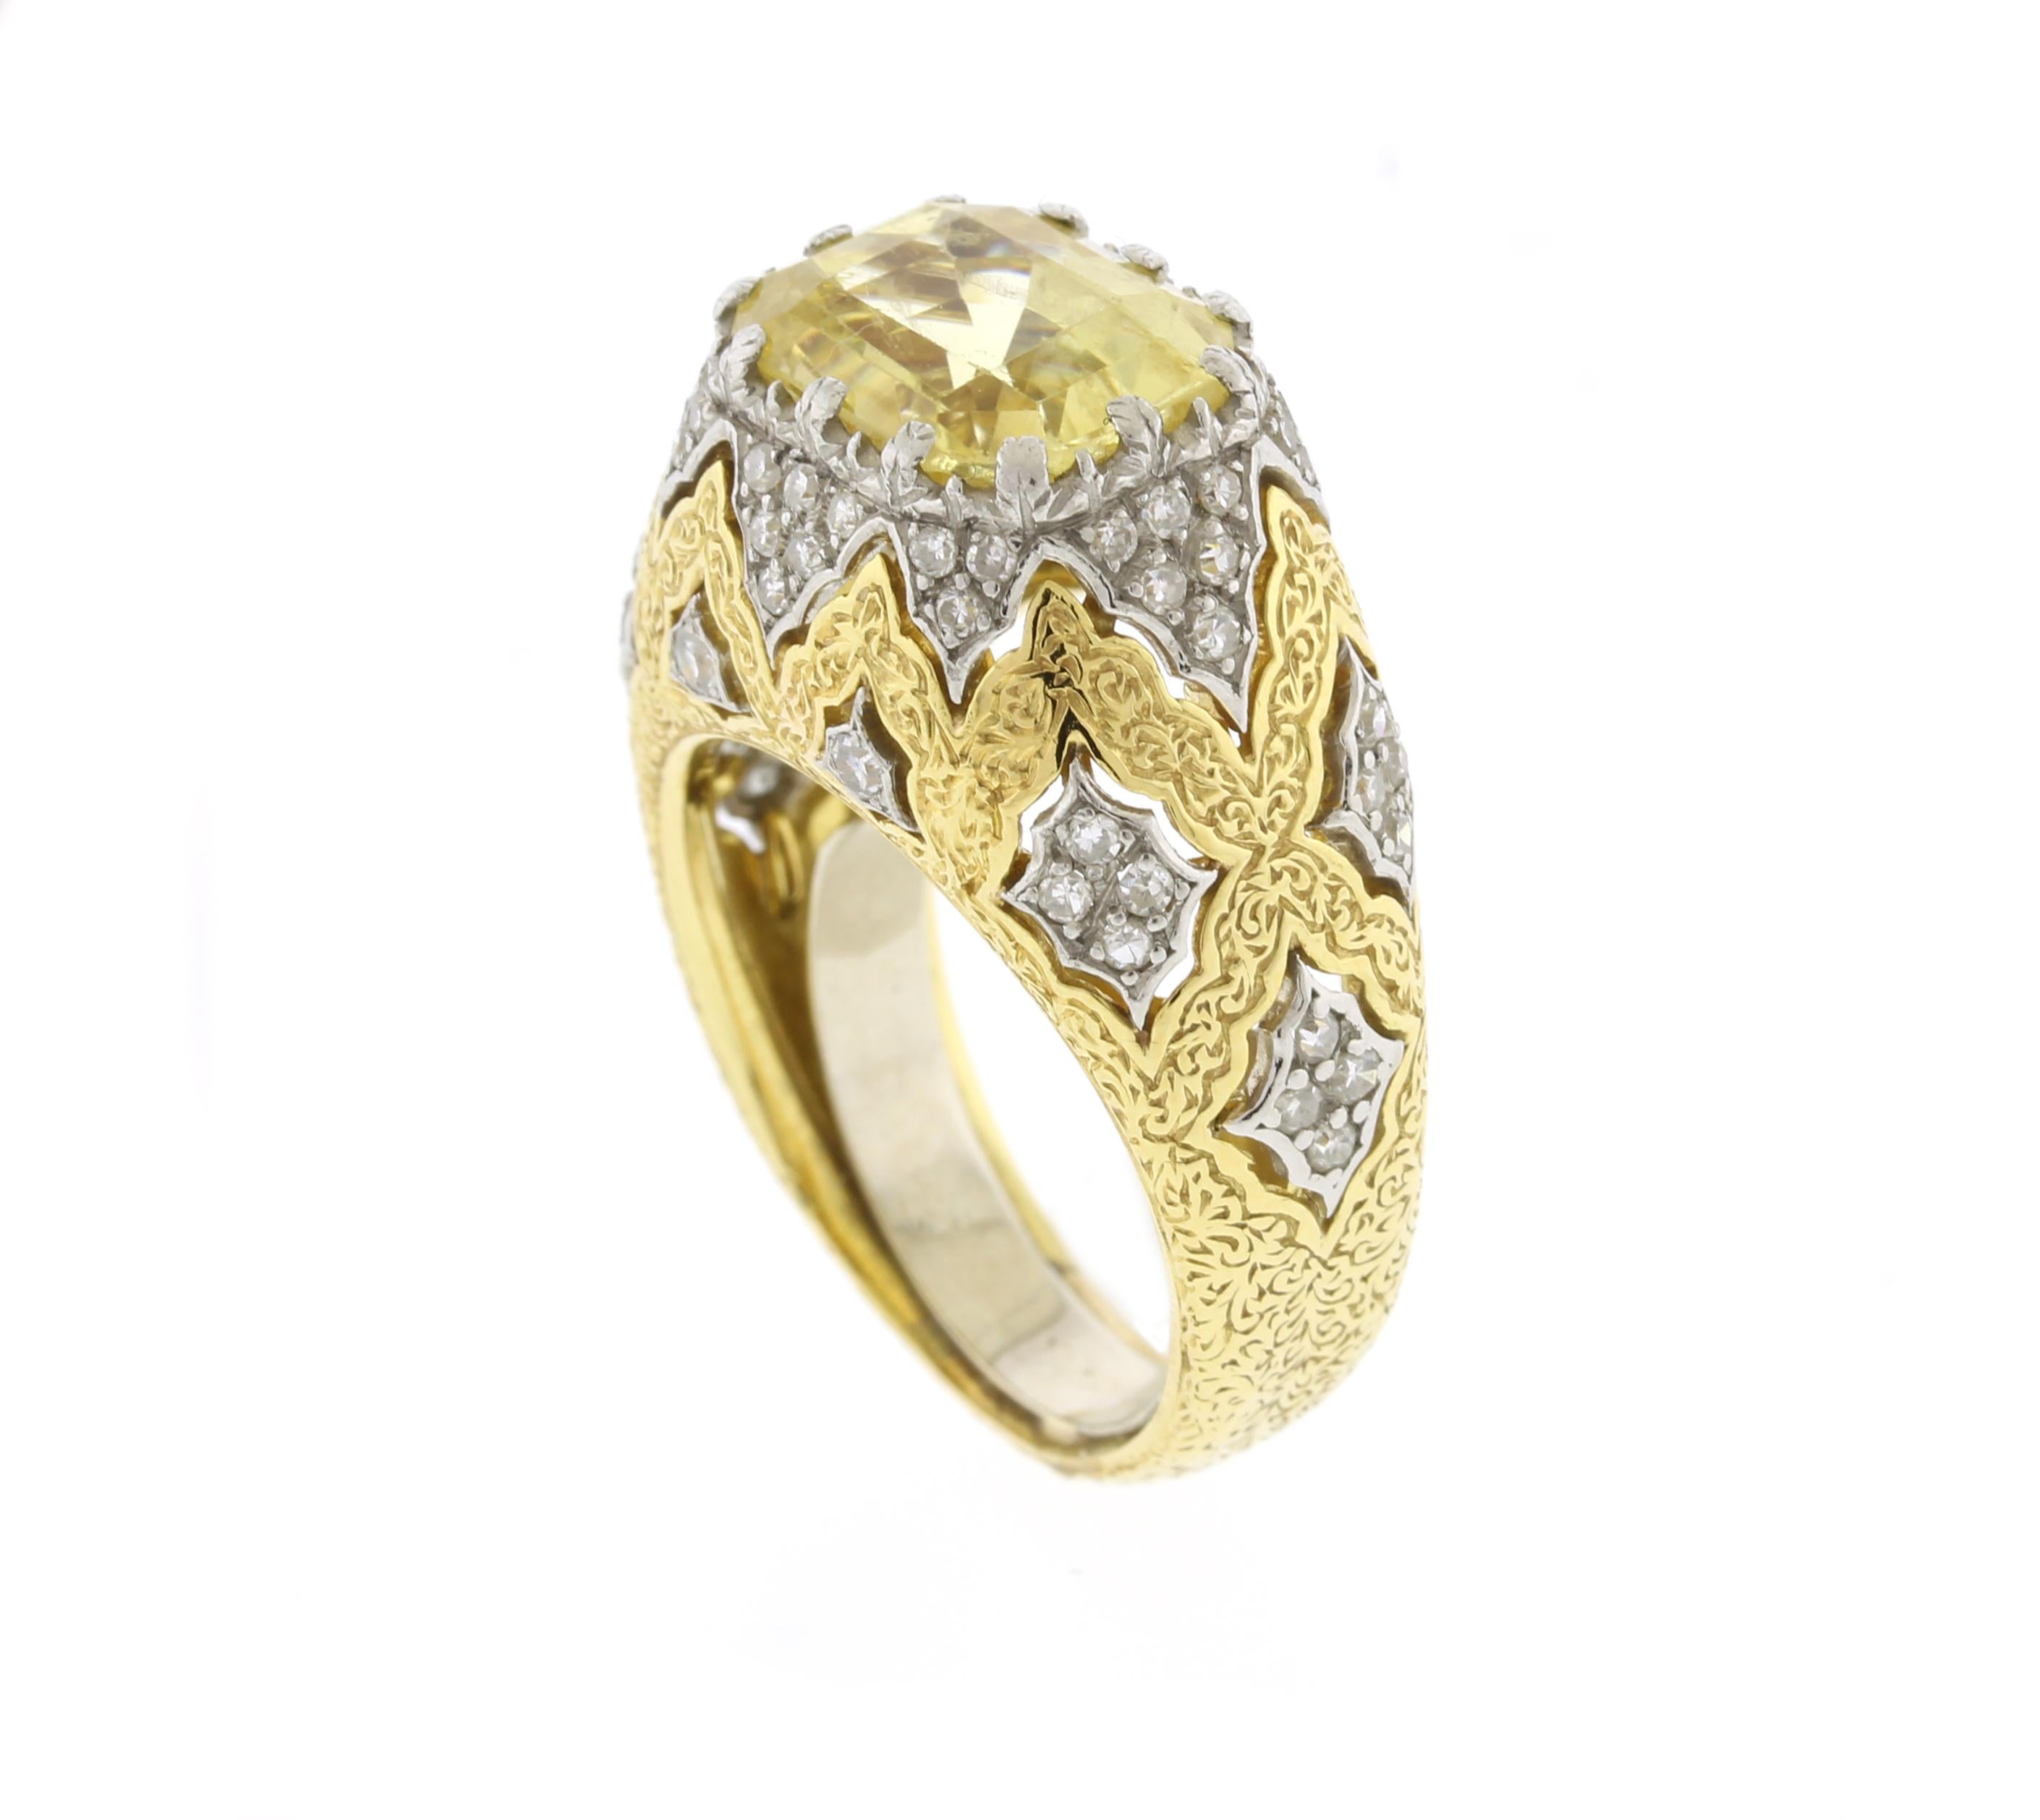 Emerald Cut Buccellati Natural Yellow Sapphire and Diamond Ring